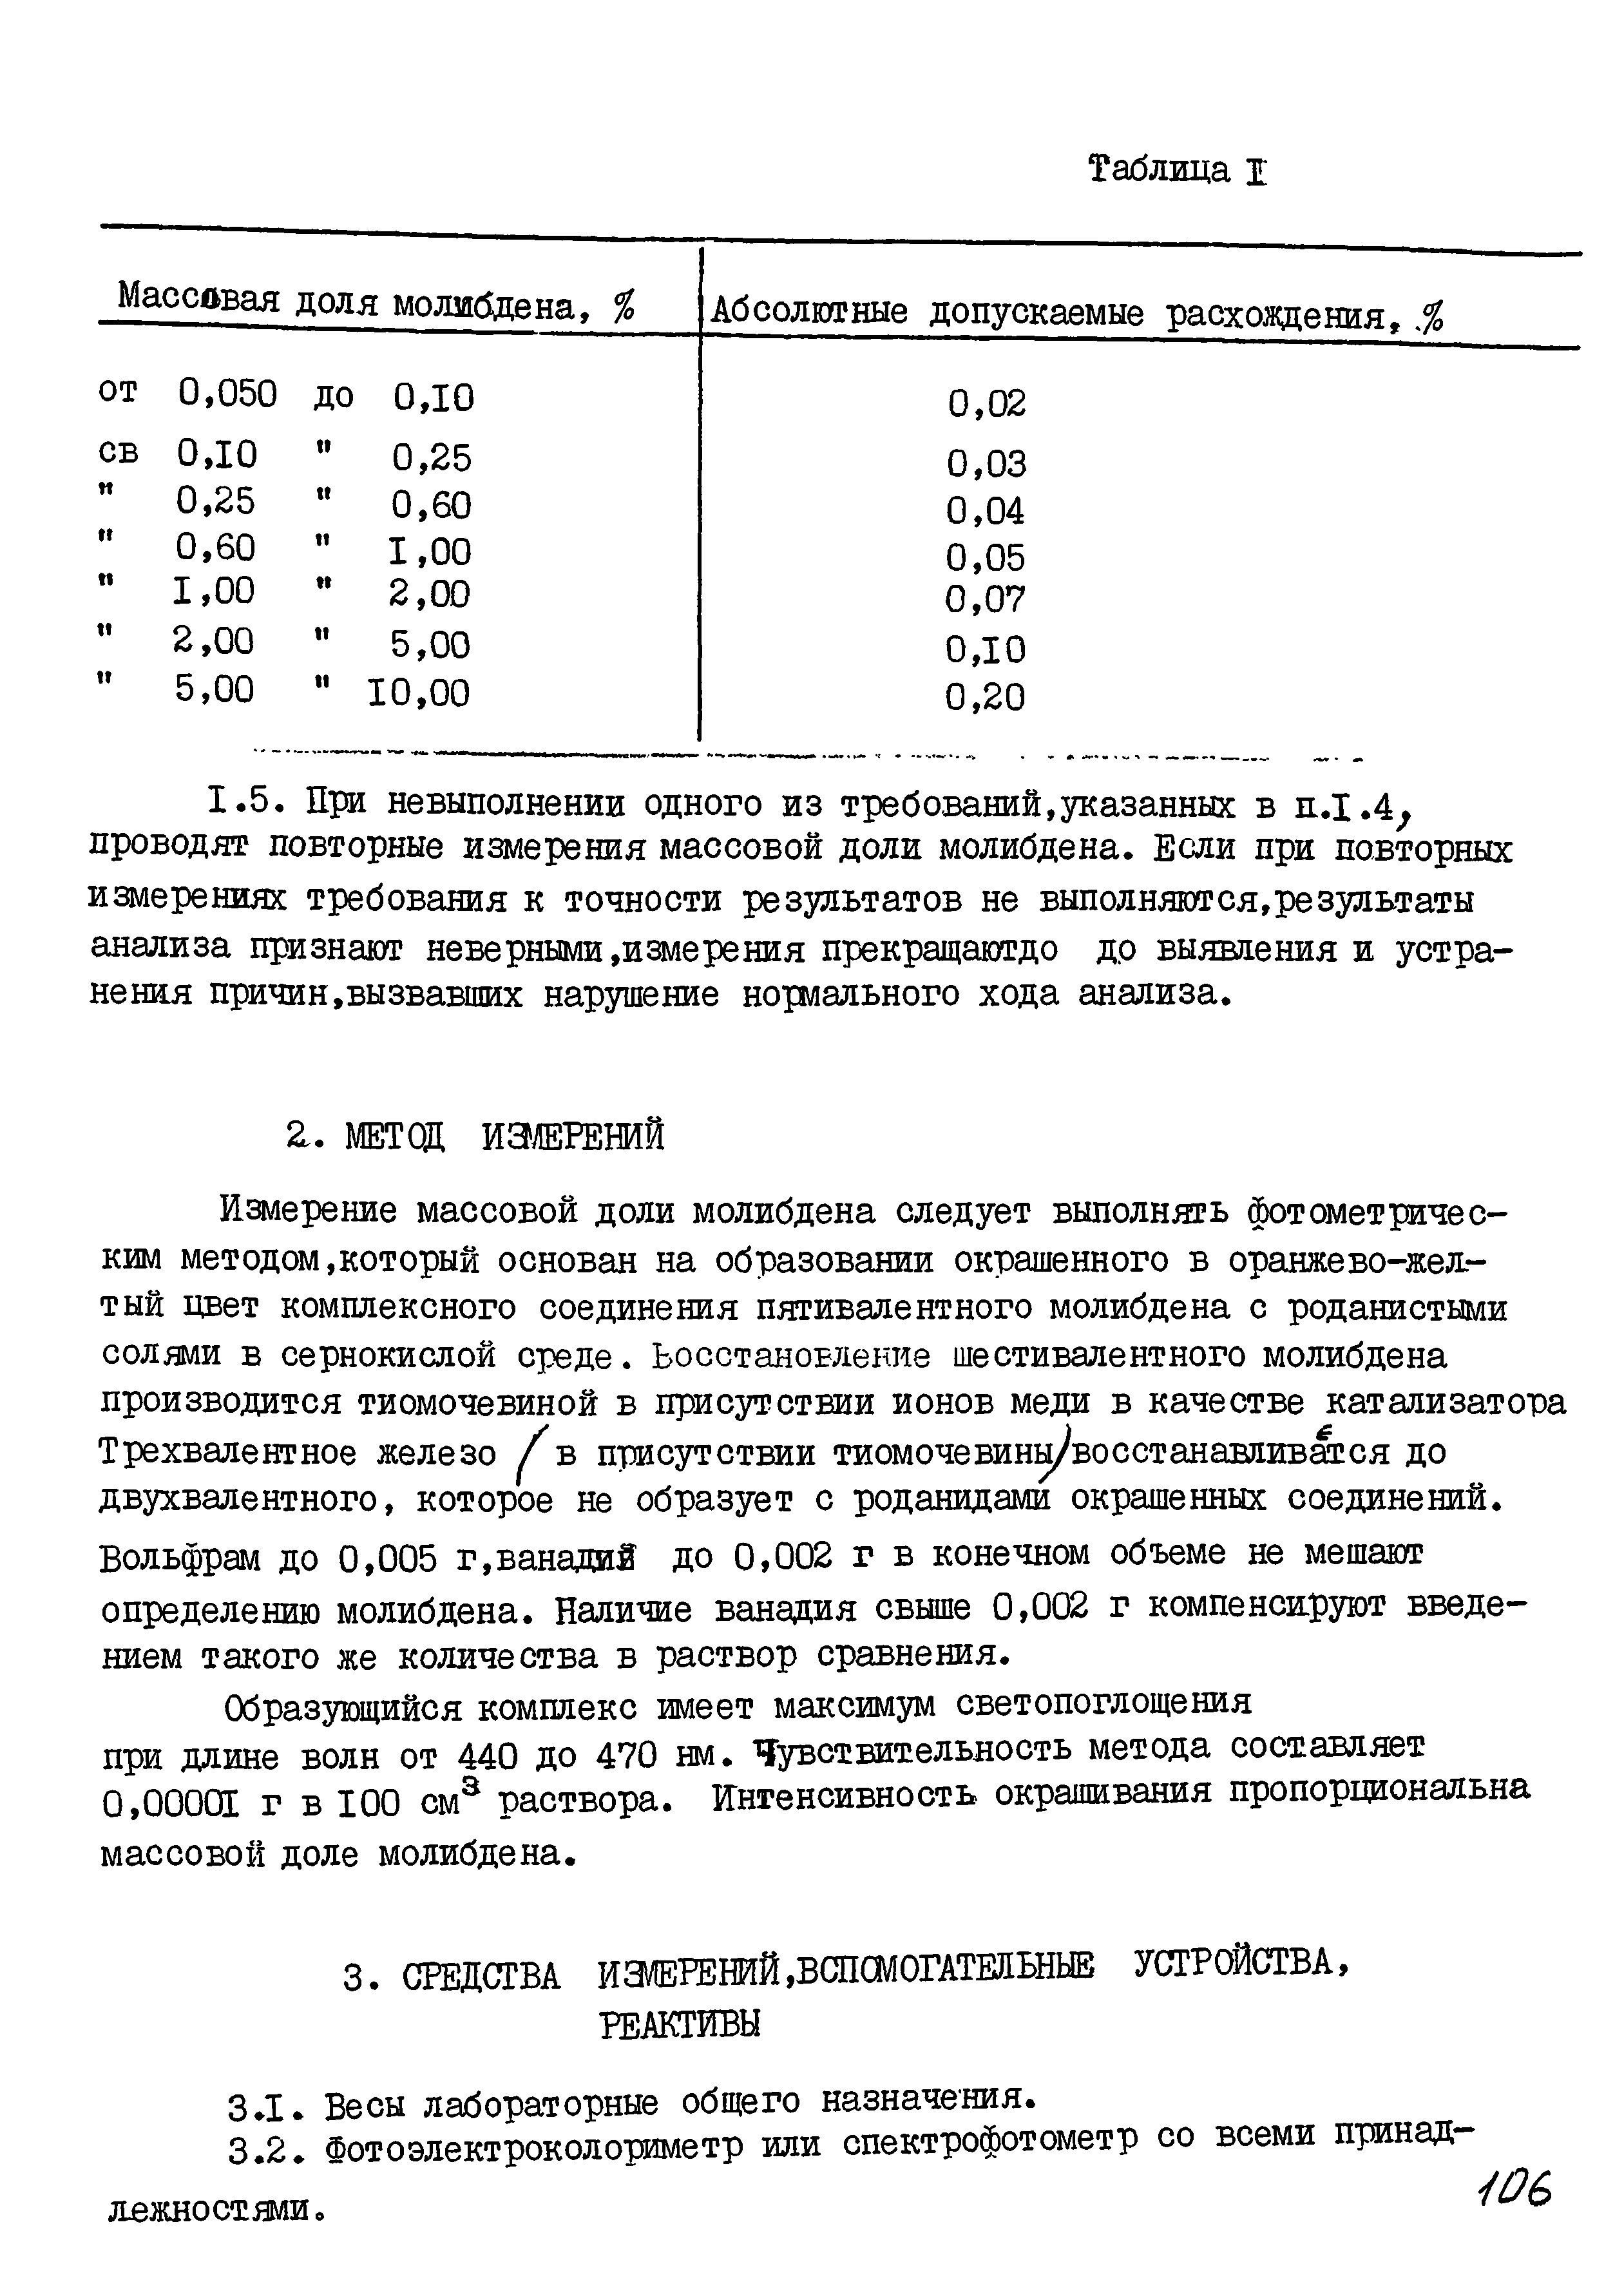 РДМ 929-17-93